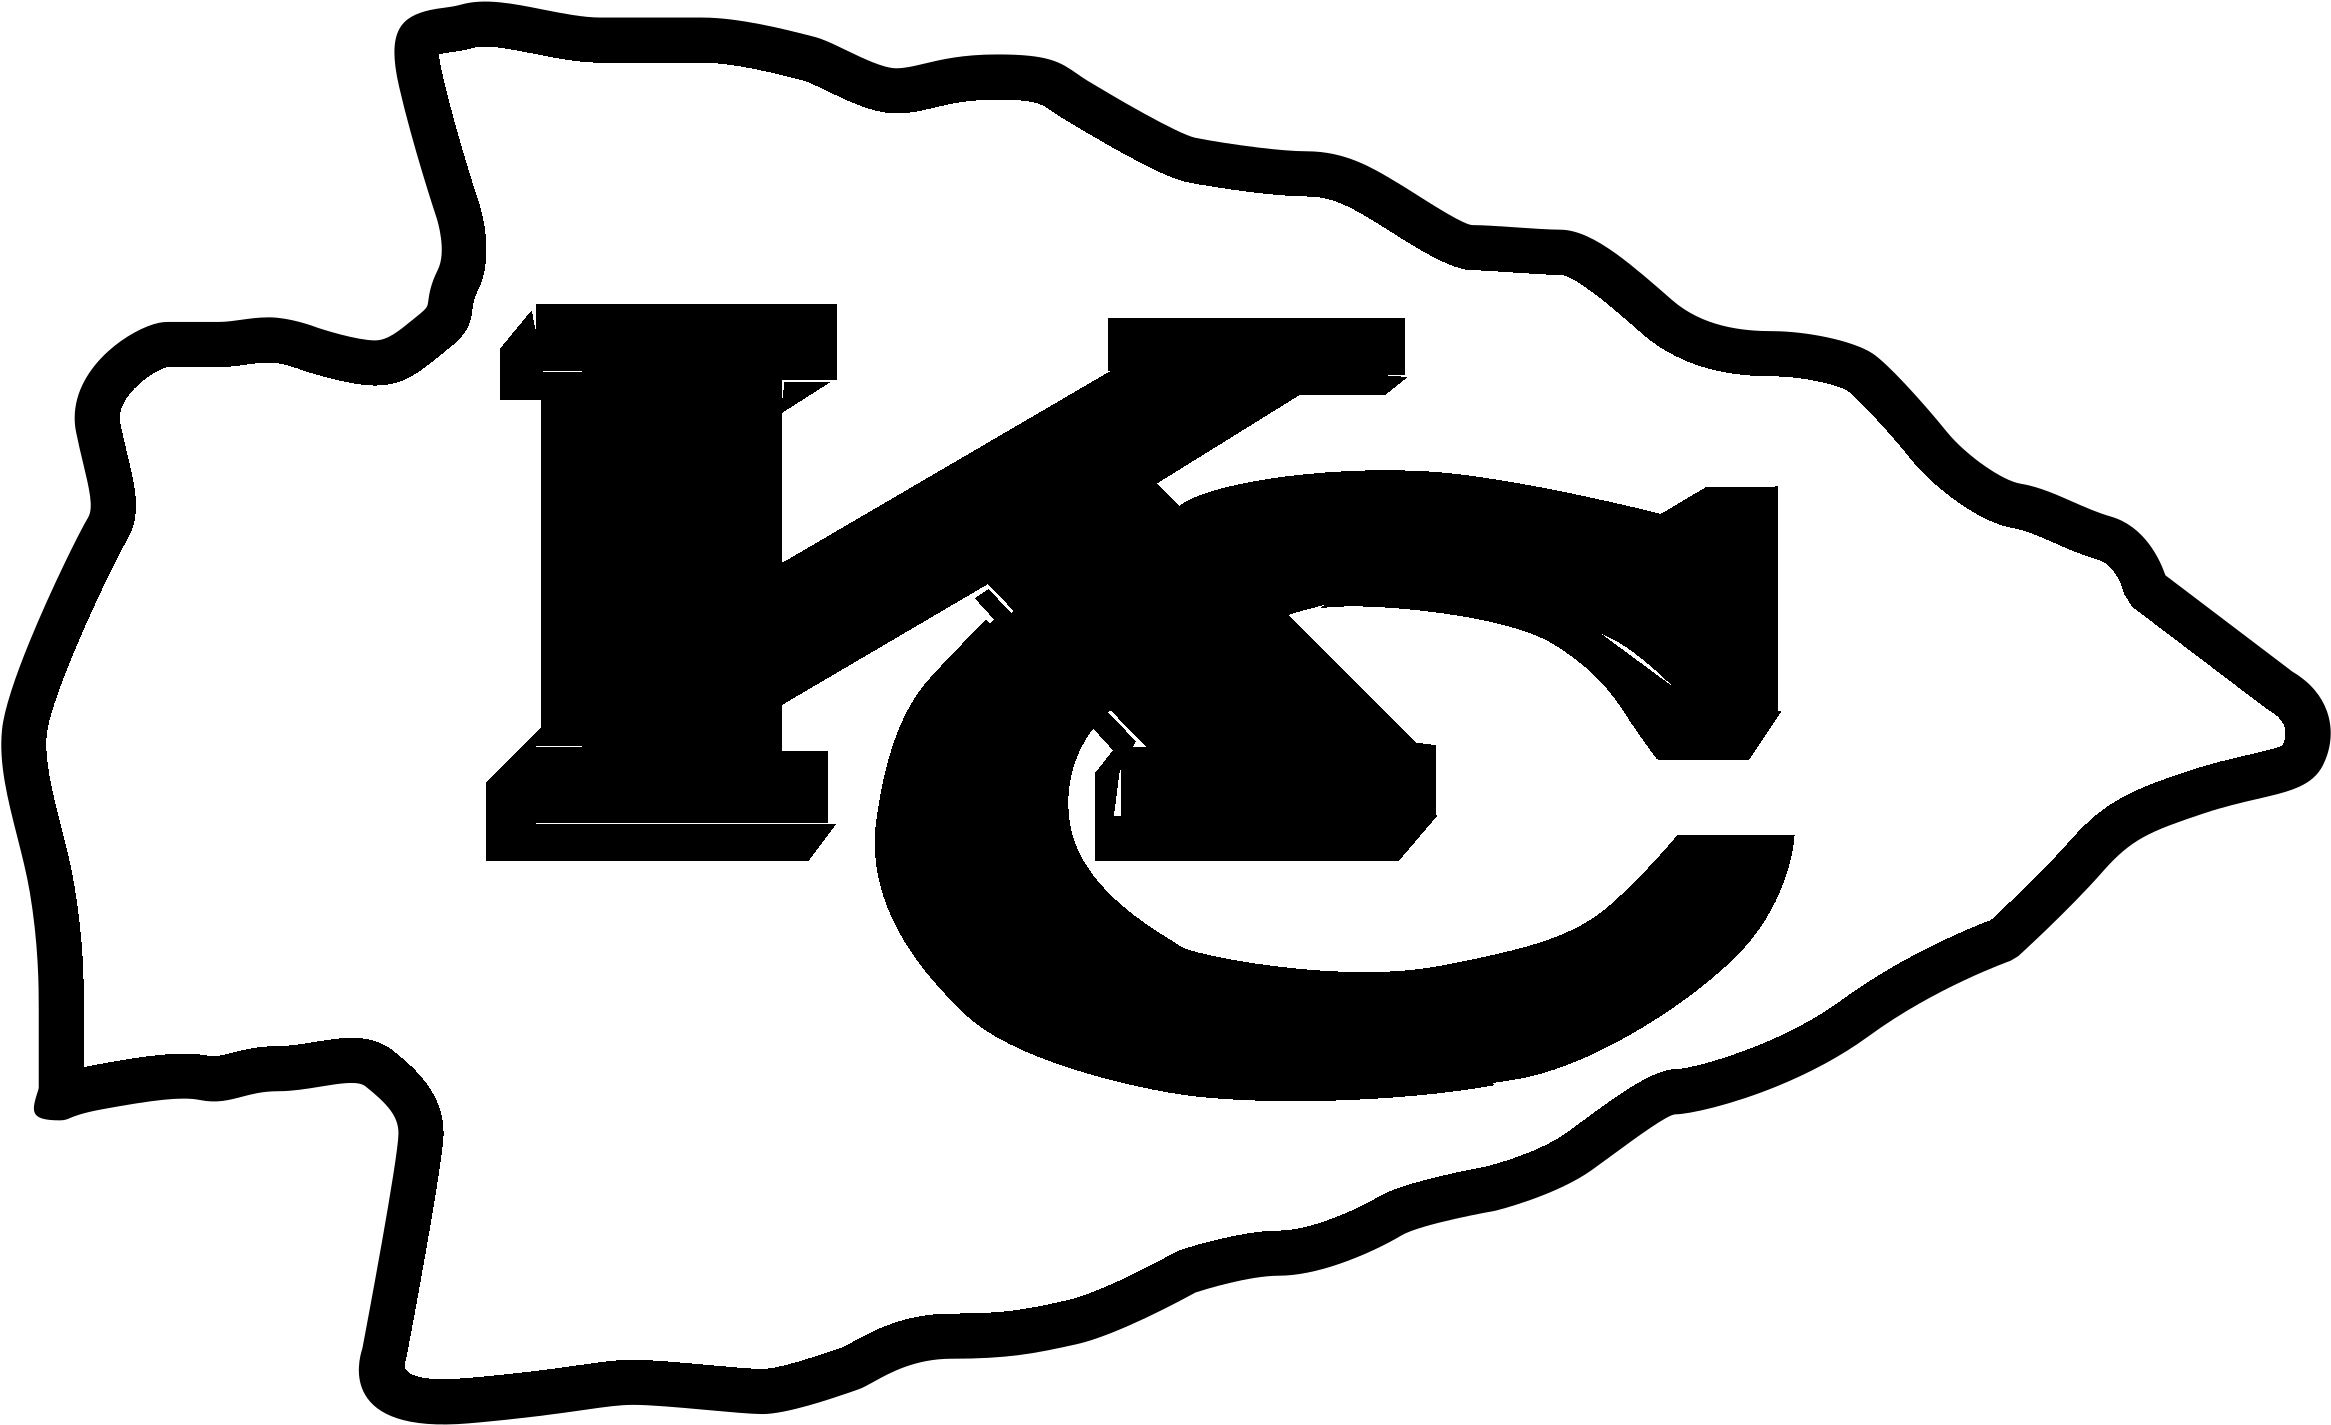 Kansas City Chiefs Logo PNG Image HD